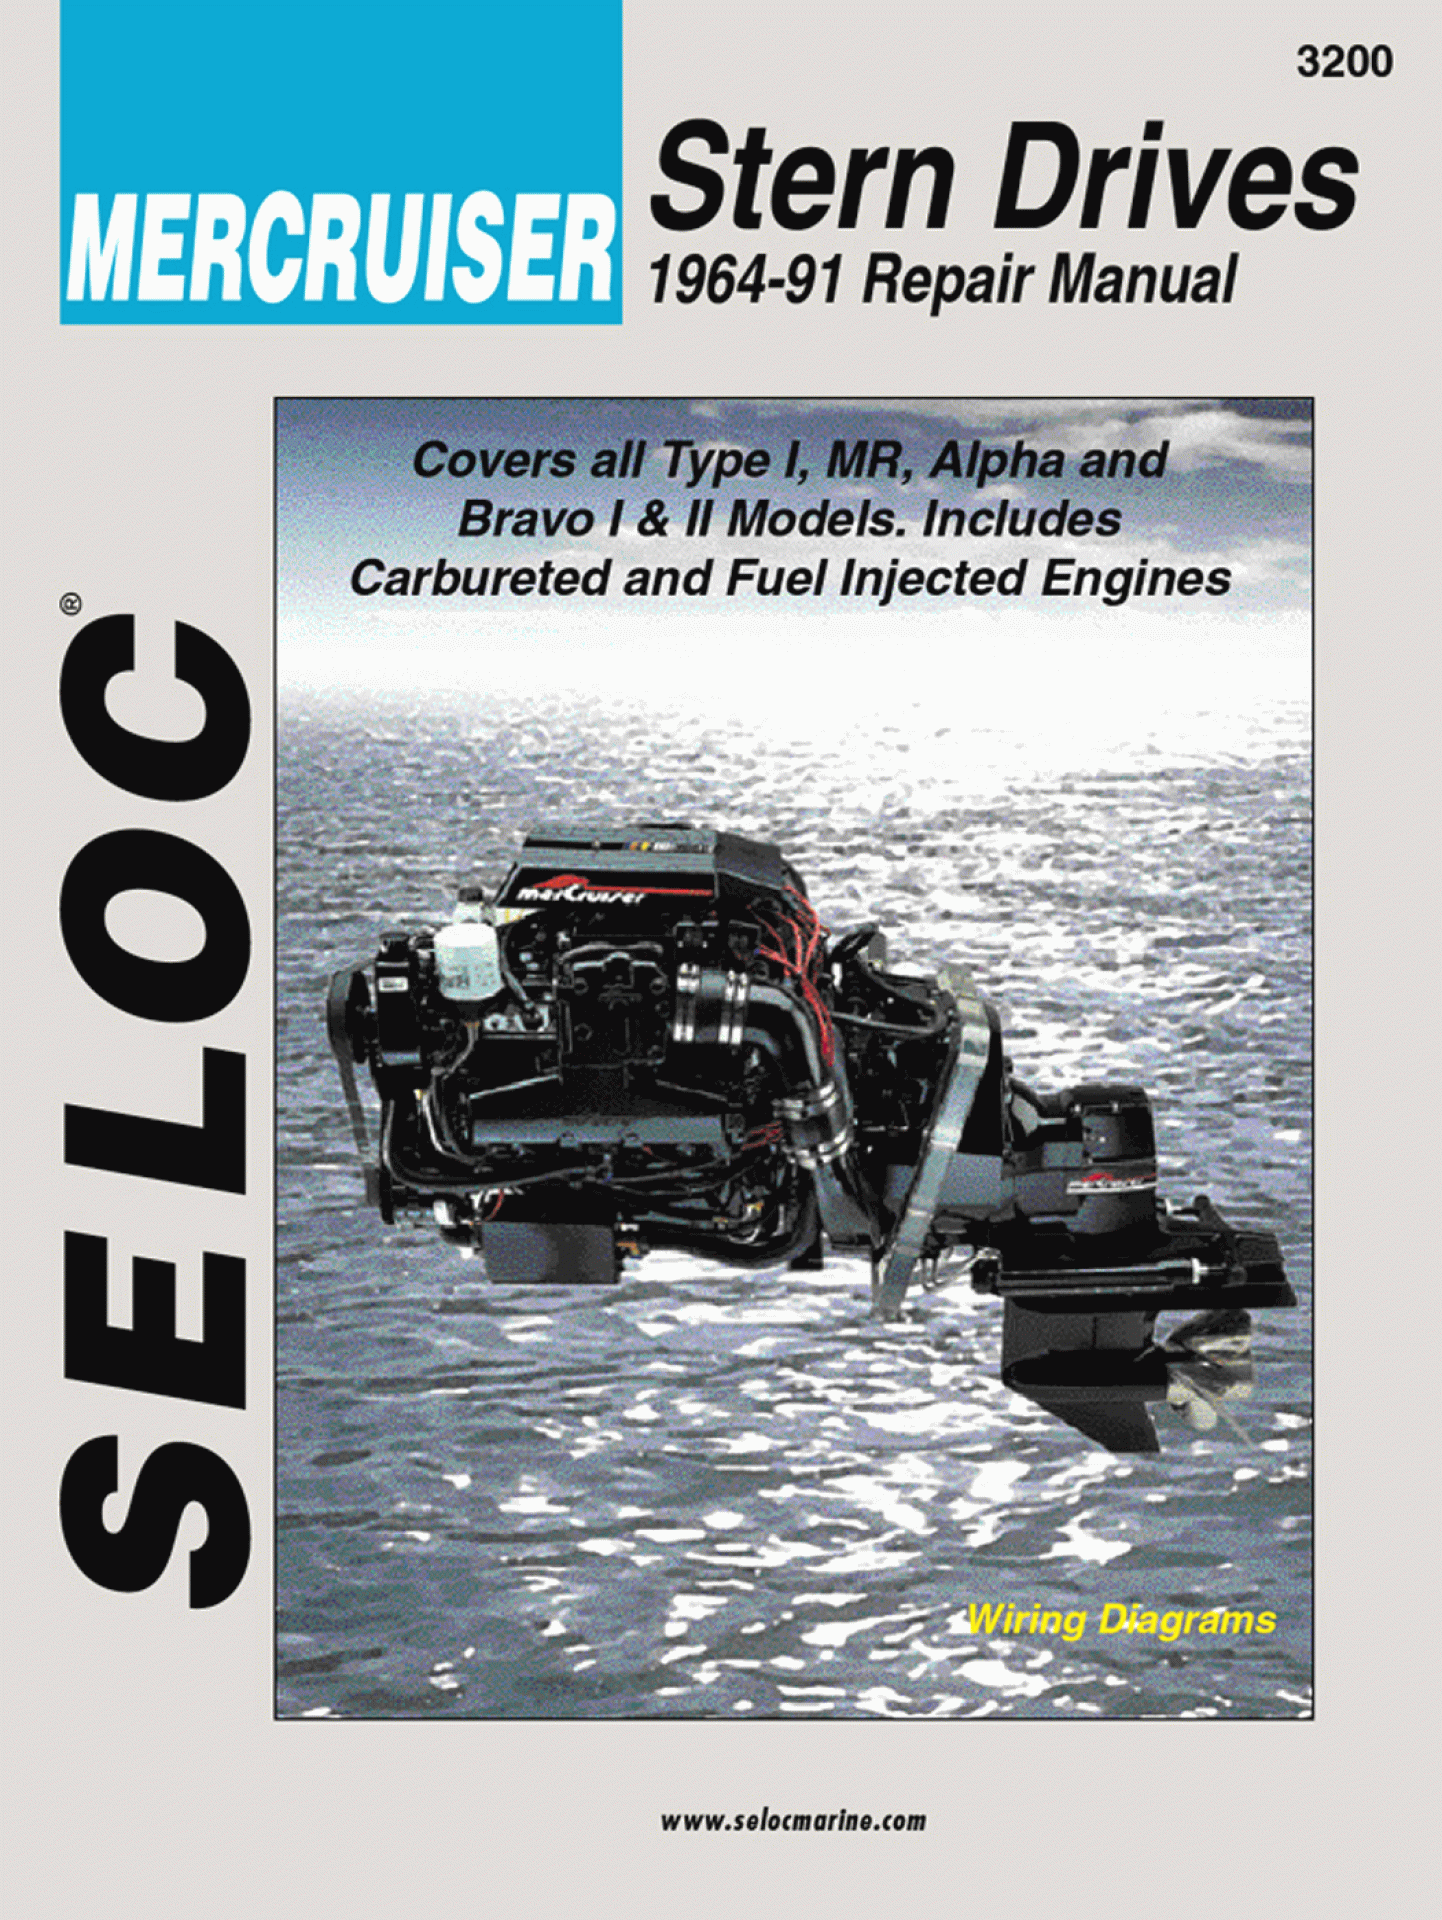 SELOC PUBLISHING | 18-03200 | REPAIR MANUAL Mercruiser Stern Drive 1964-91